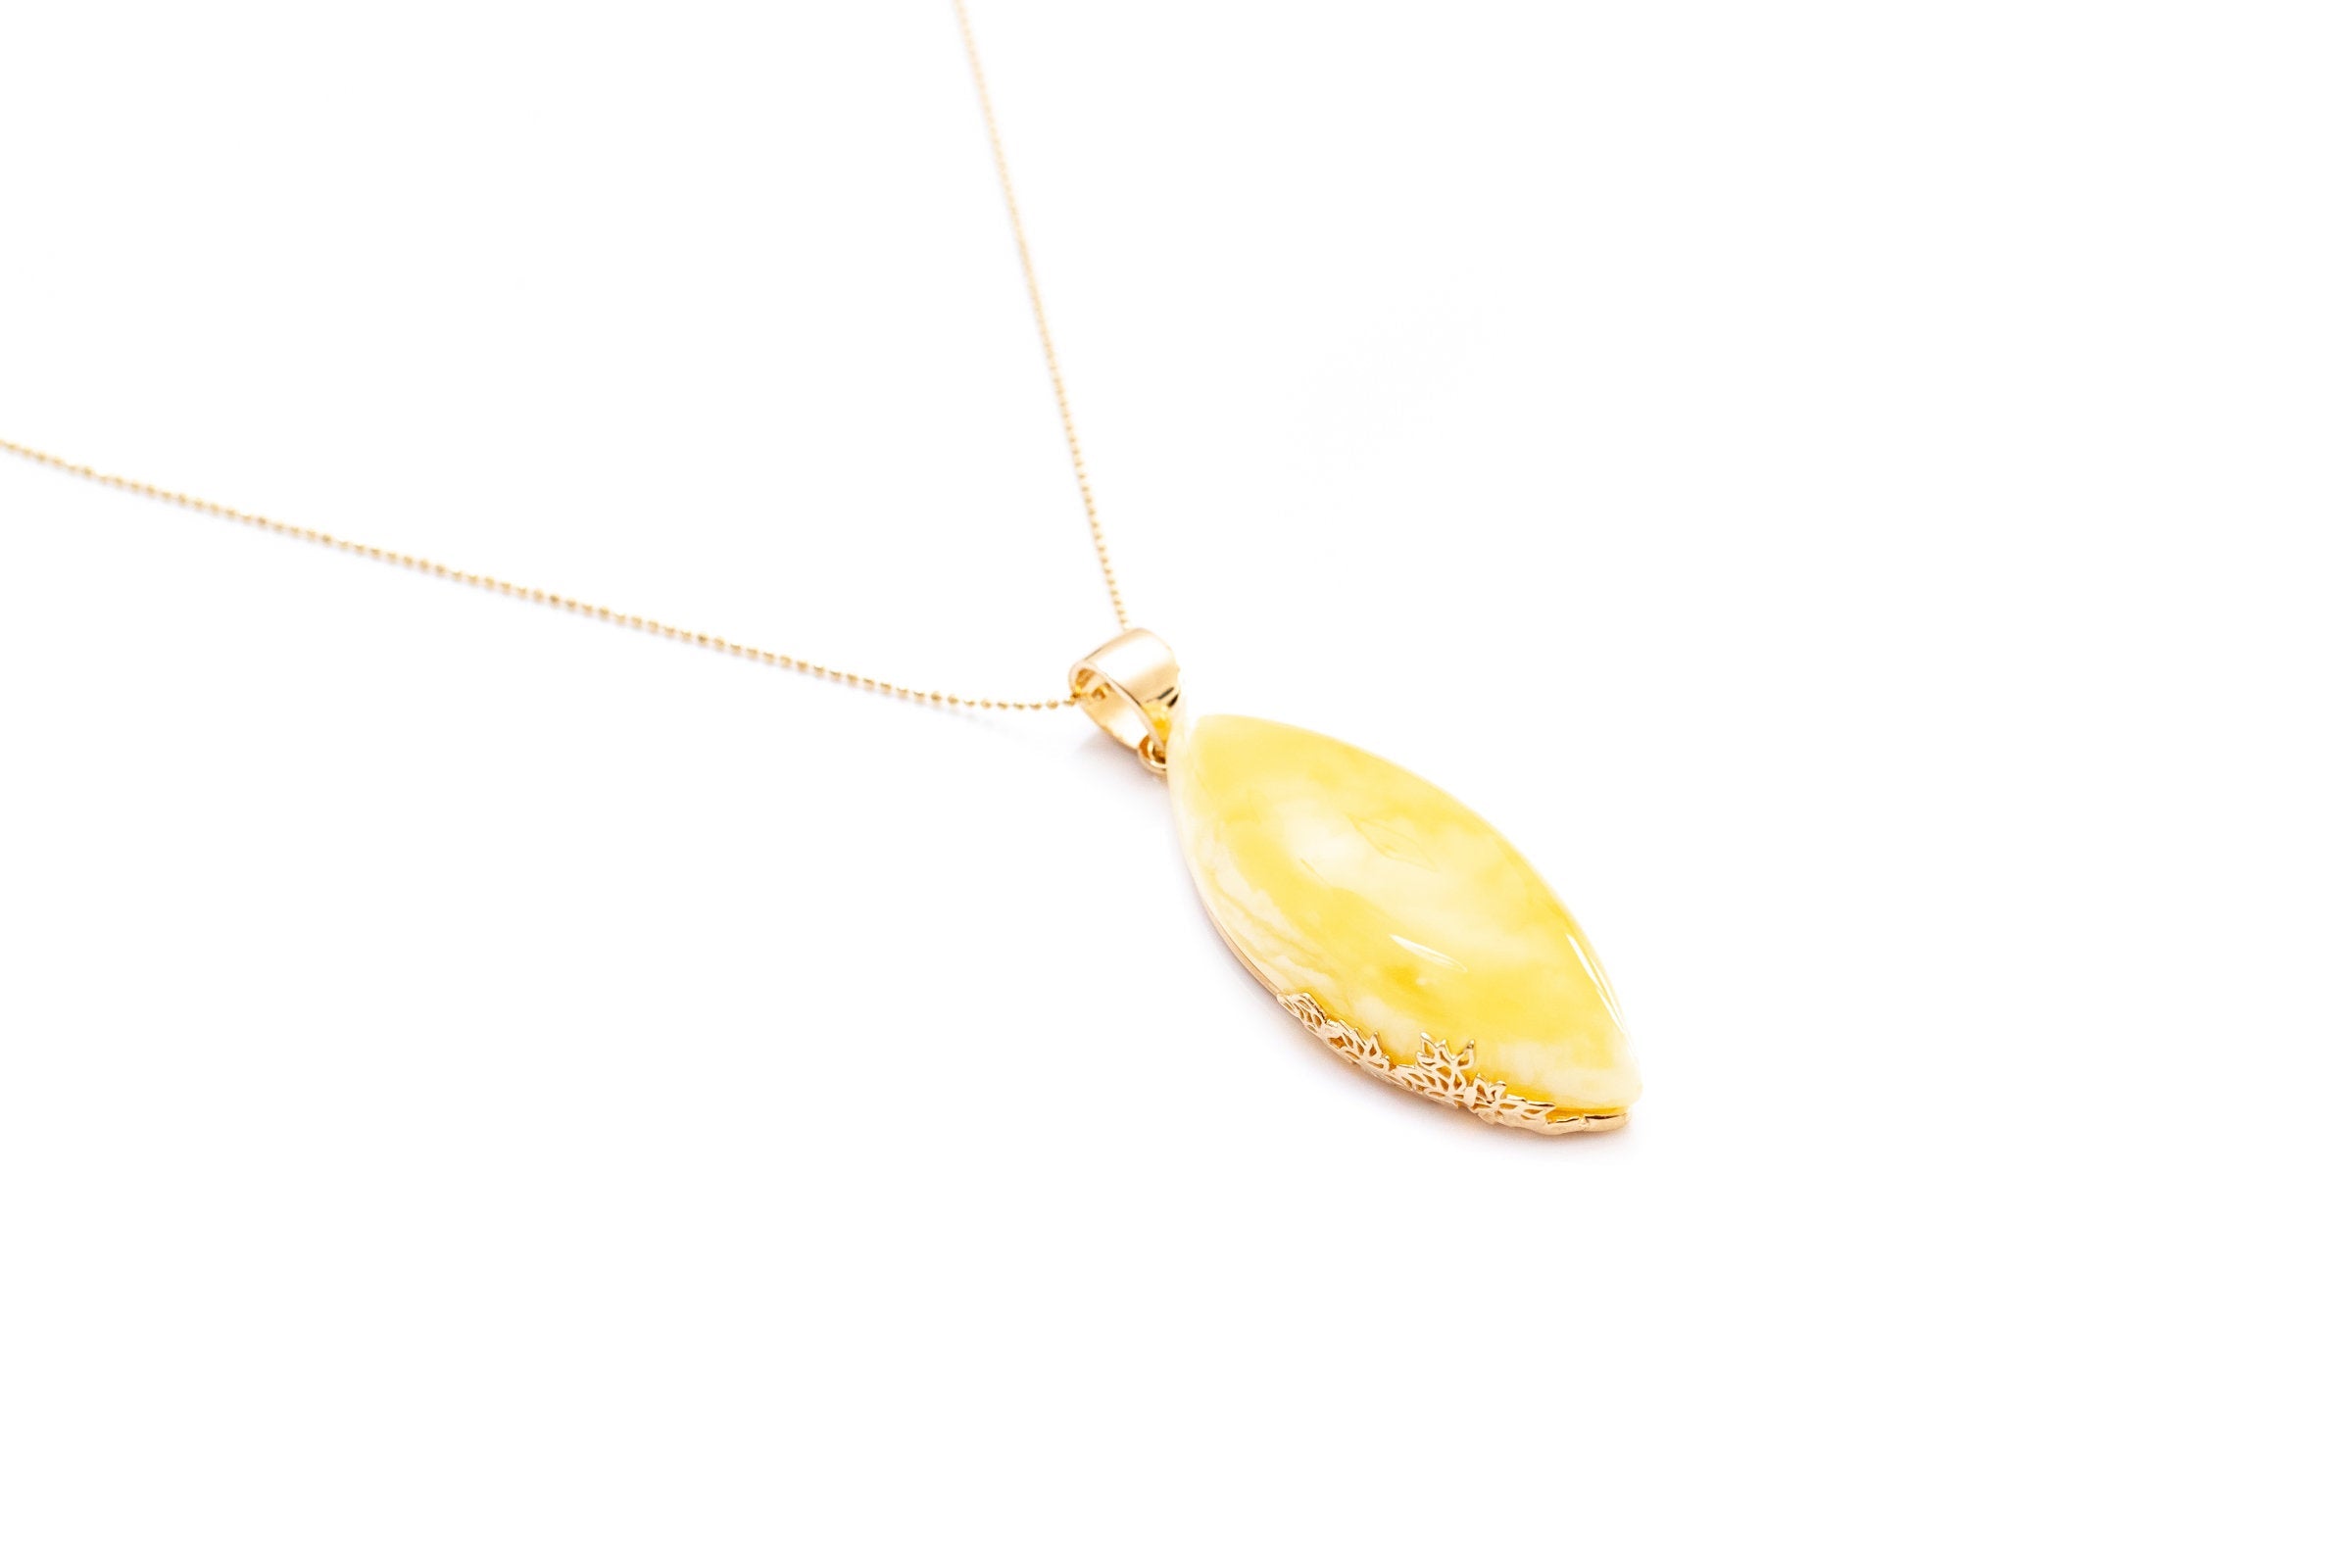 OOAK Unique Gold Plated Butterscotch Amber Necklace- Necklaces- Baltic Beauty